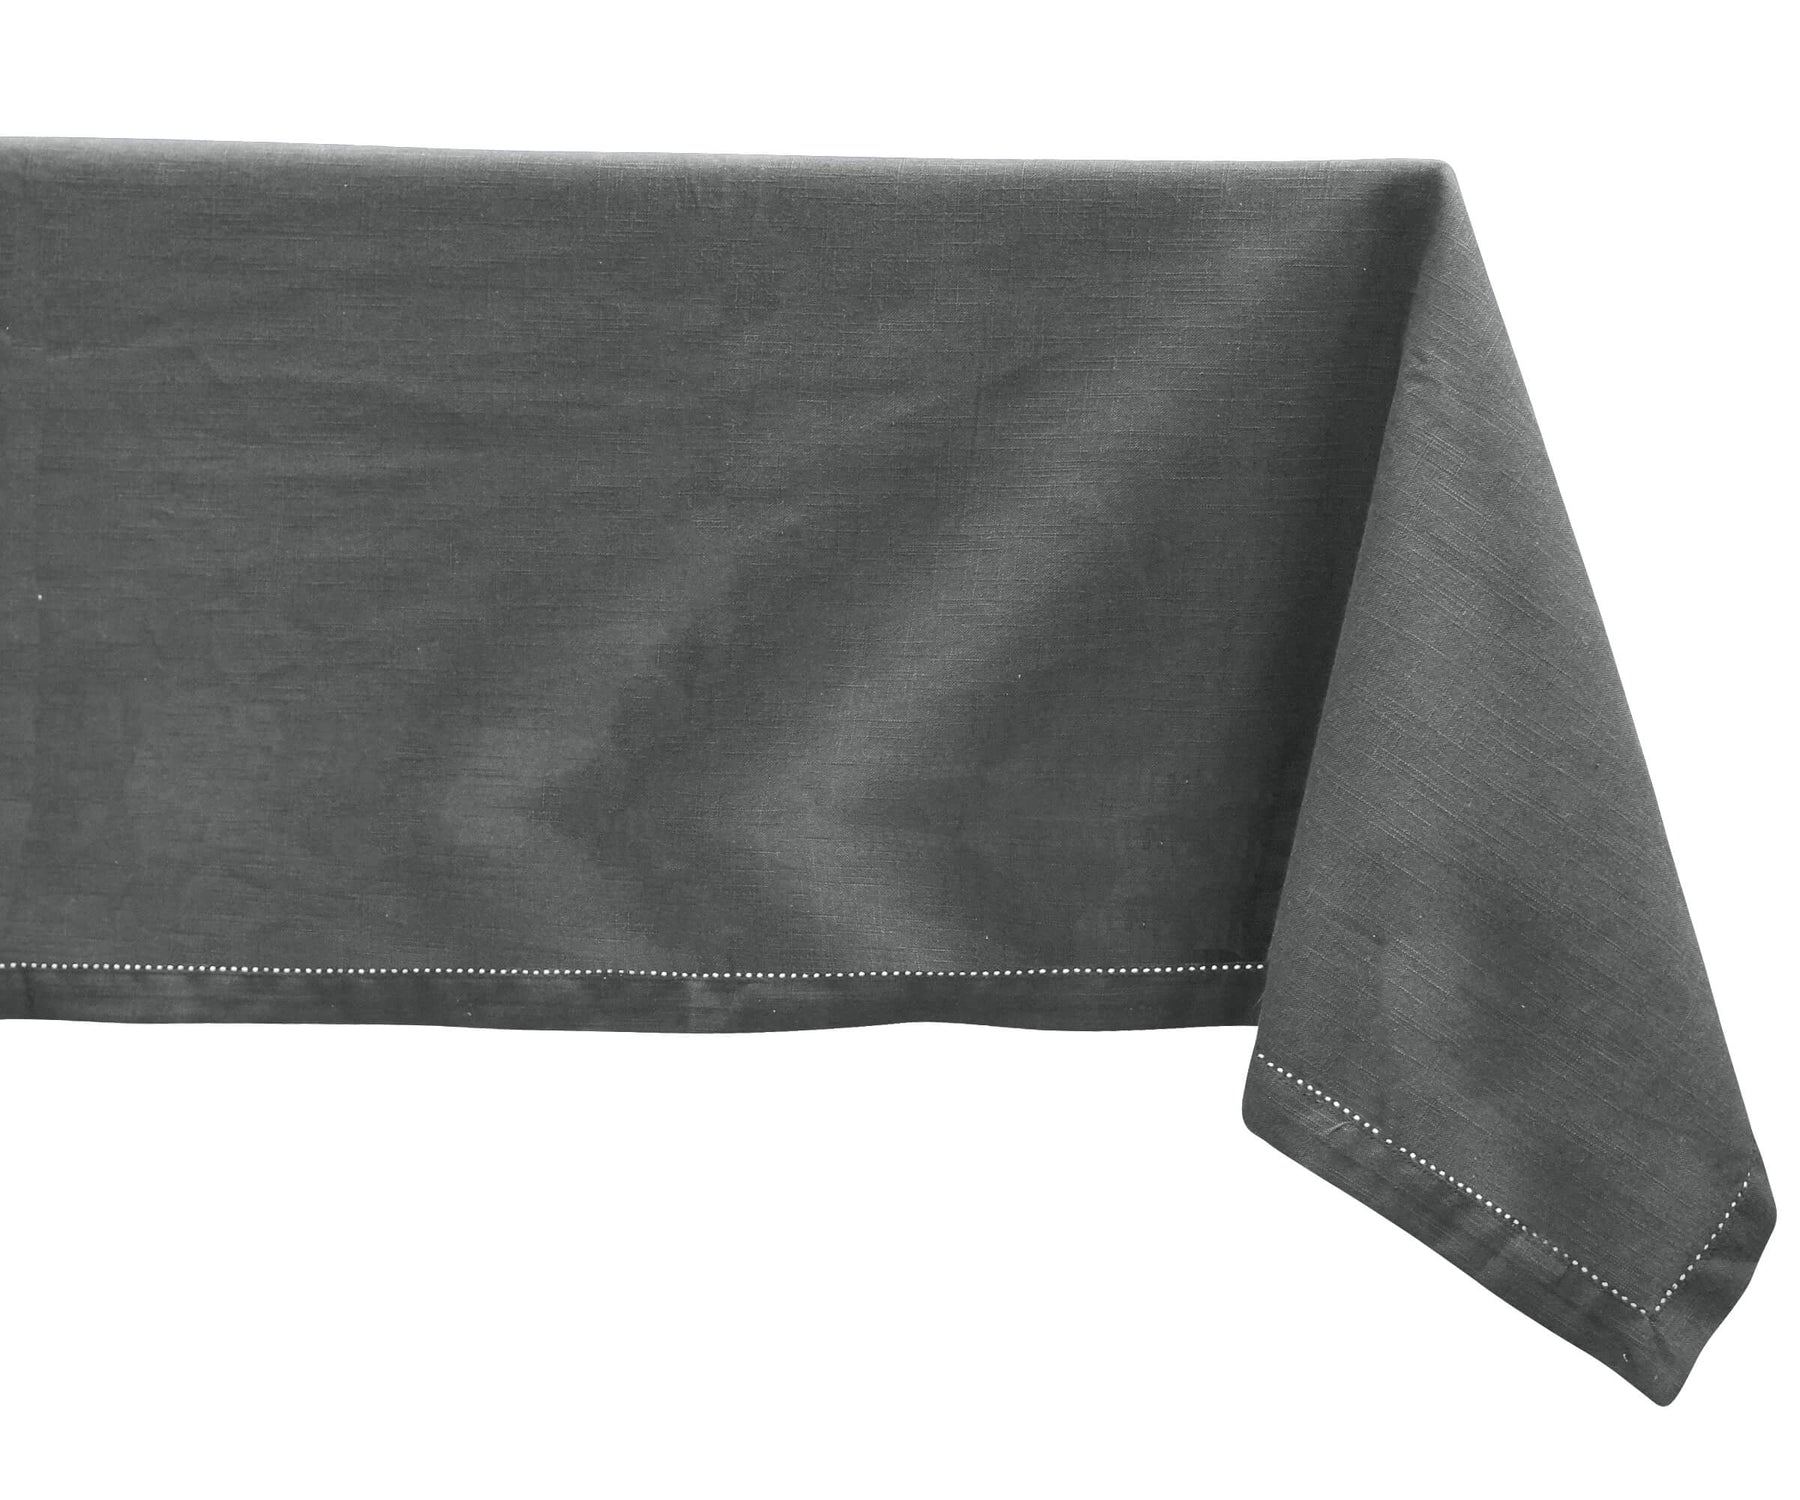 Rectangular Tablecloth - Cloth tablecloths spreads on the table.